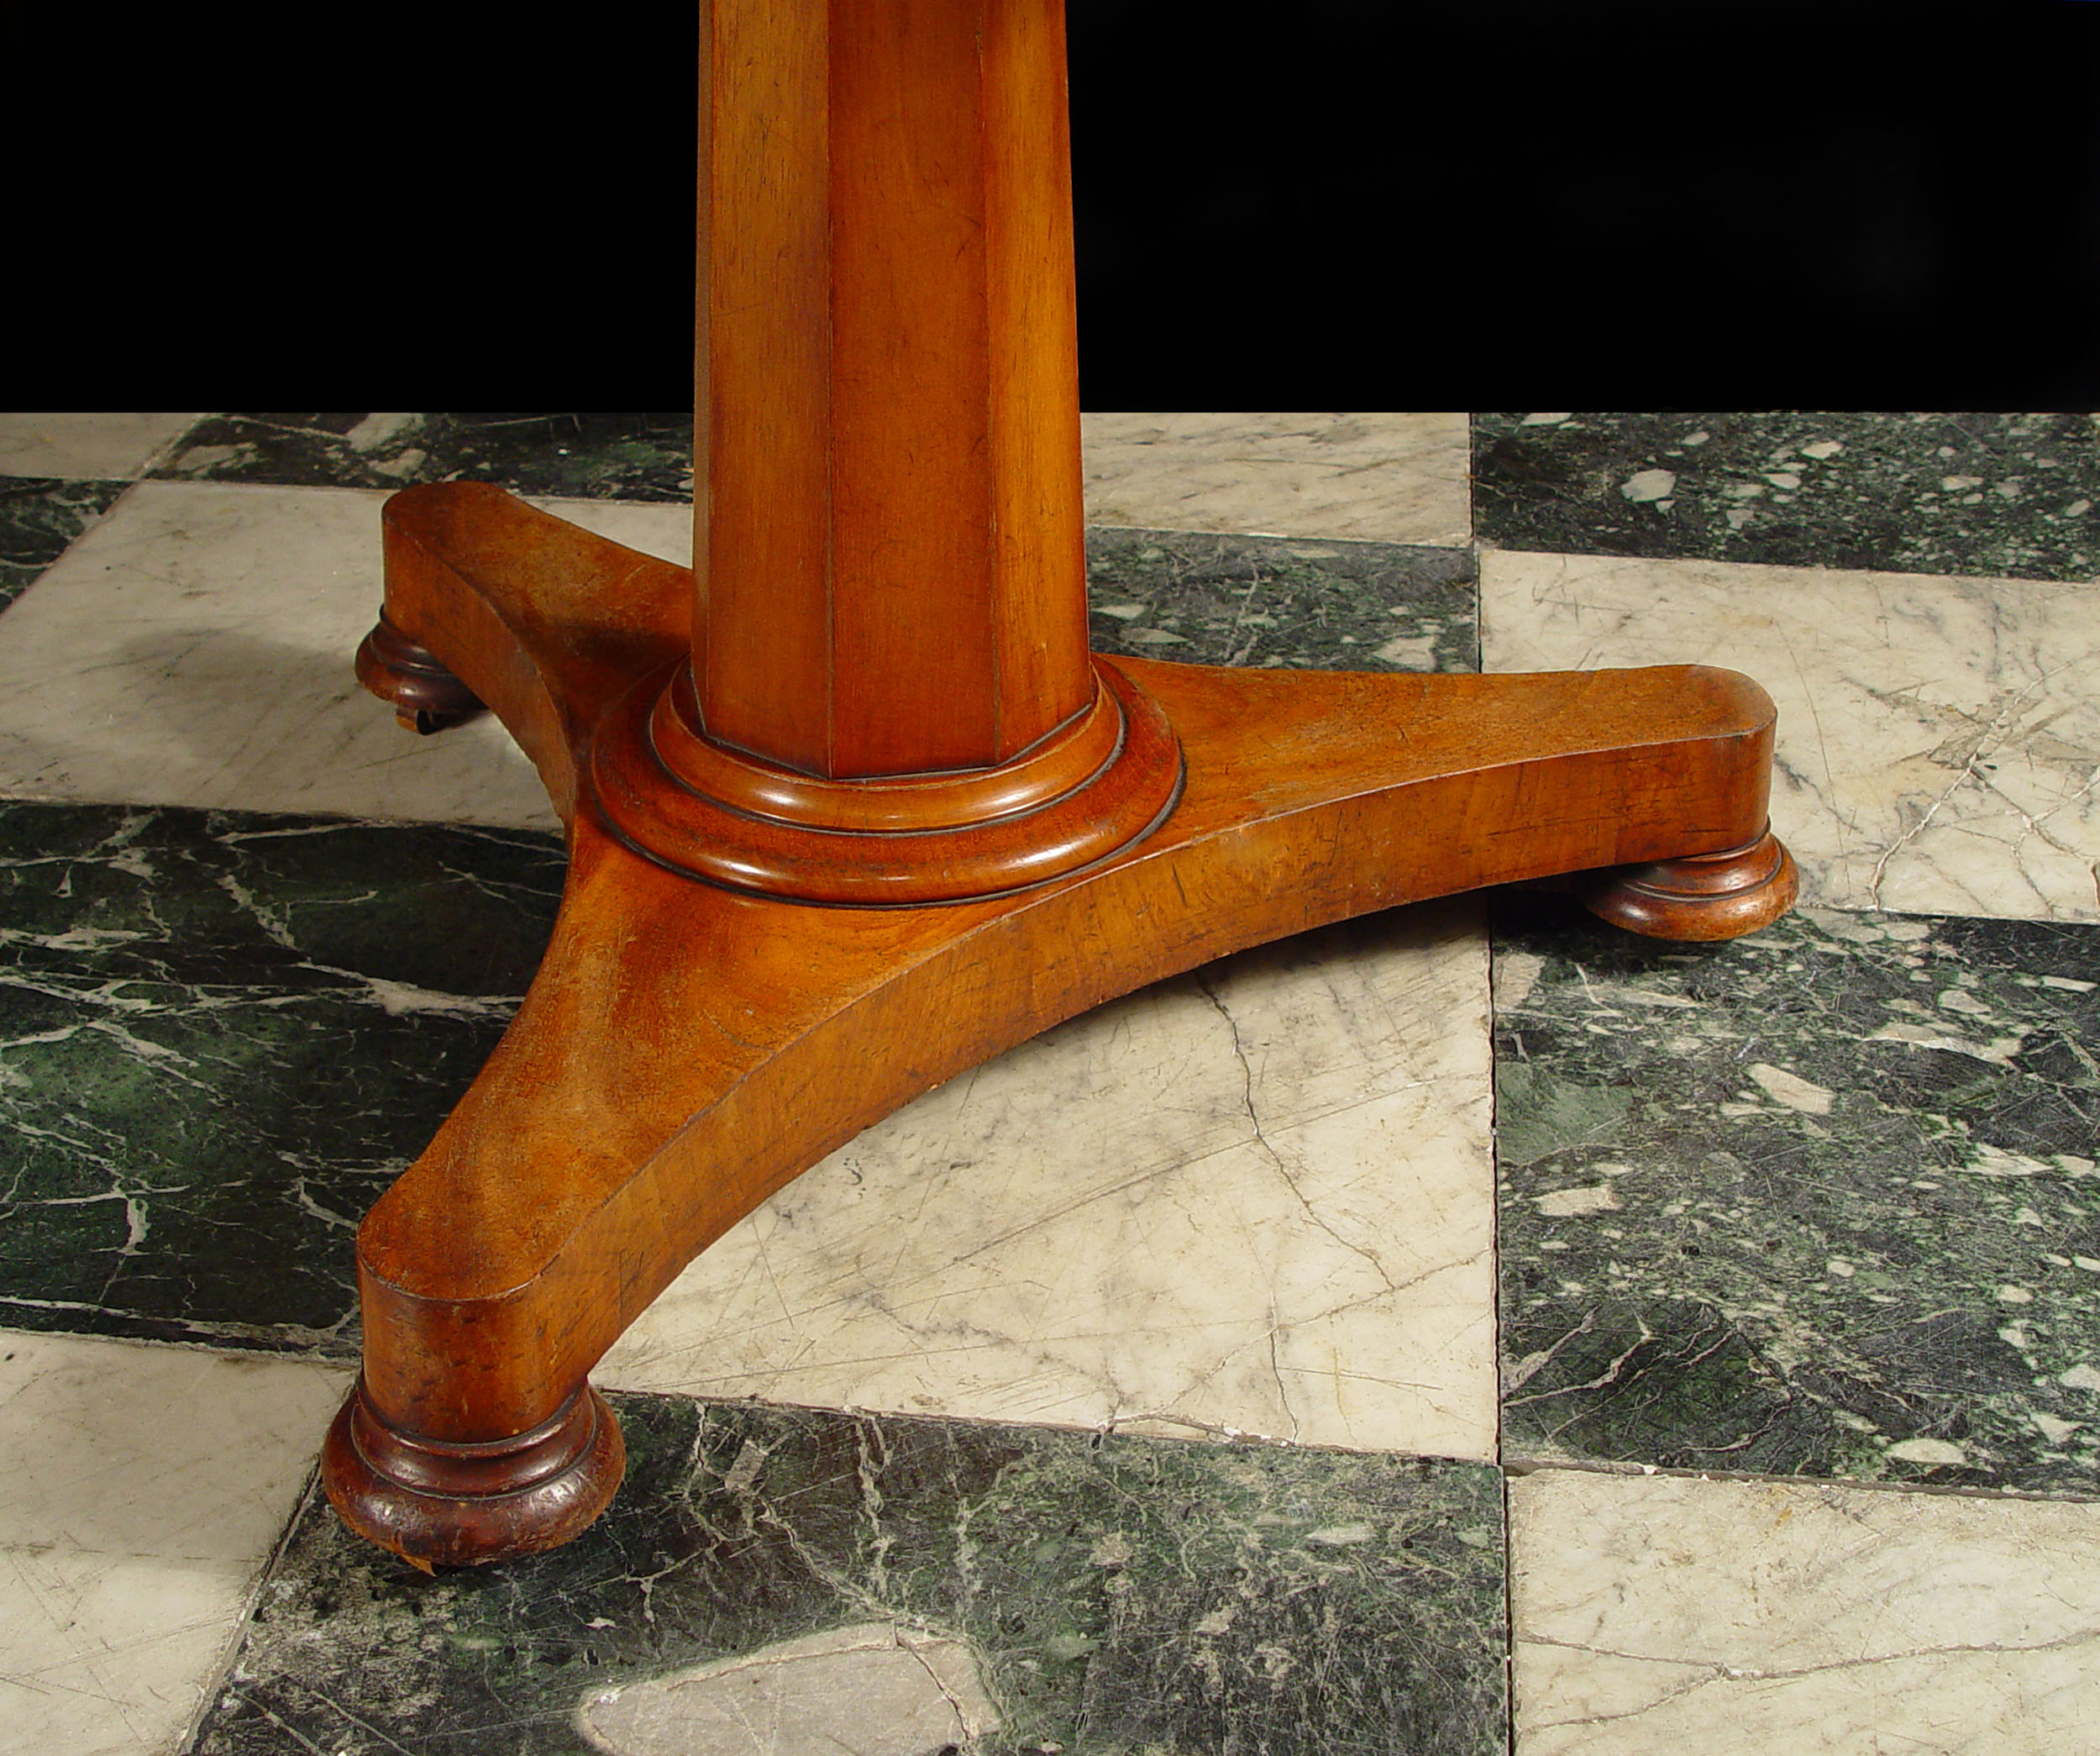 An Early Victorian Oak Tilt Top Table

